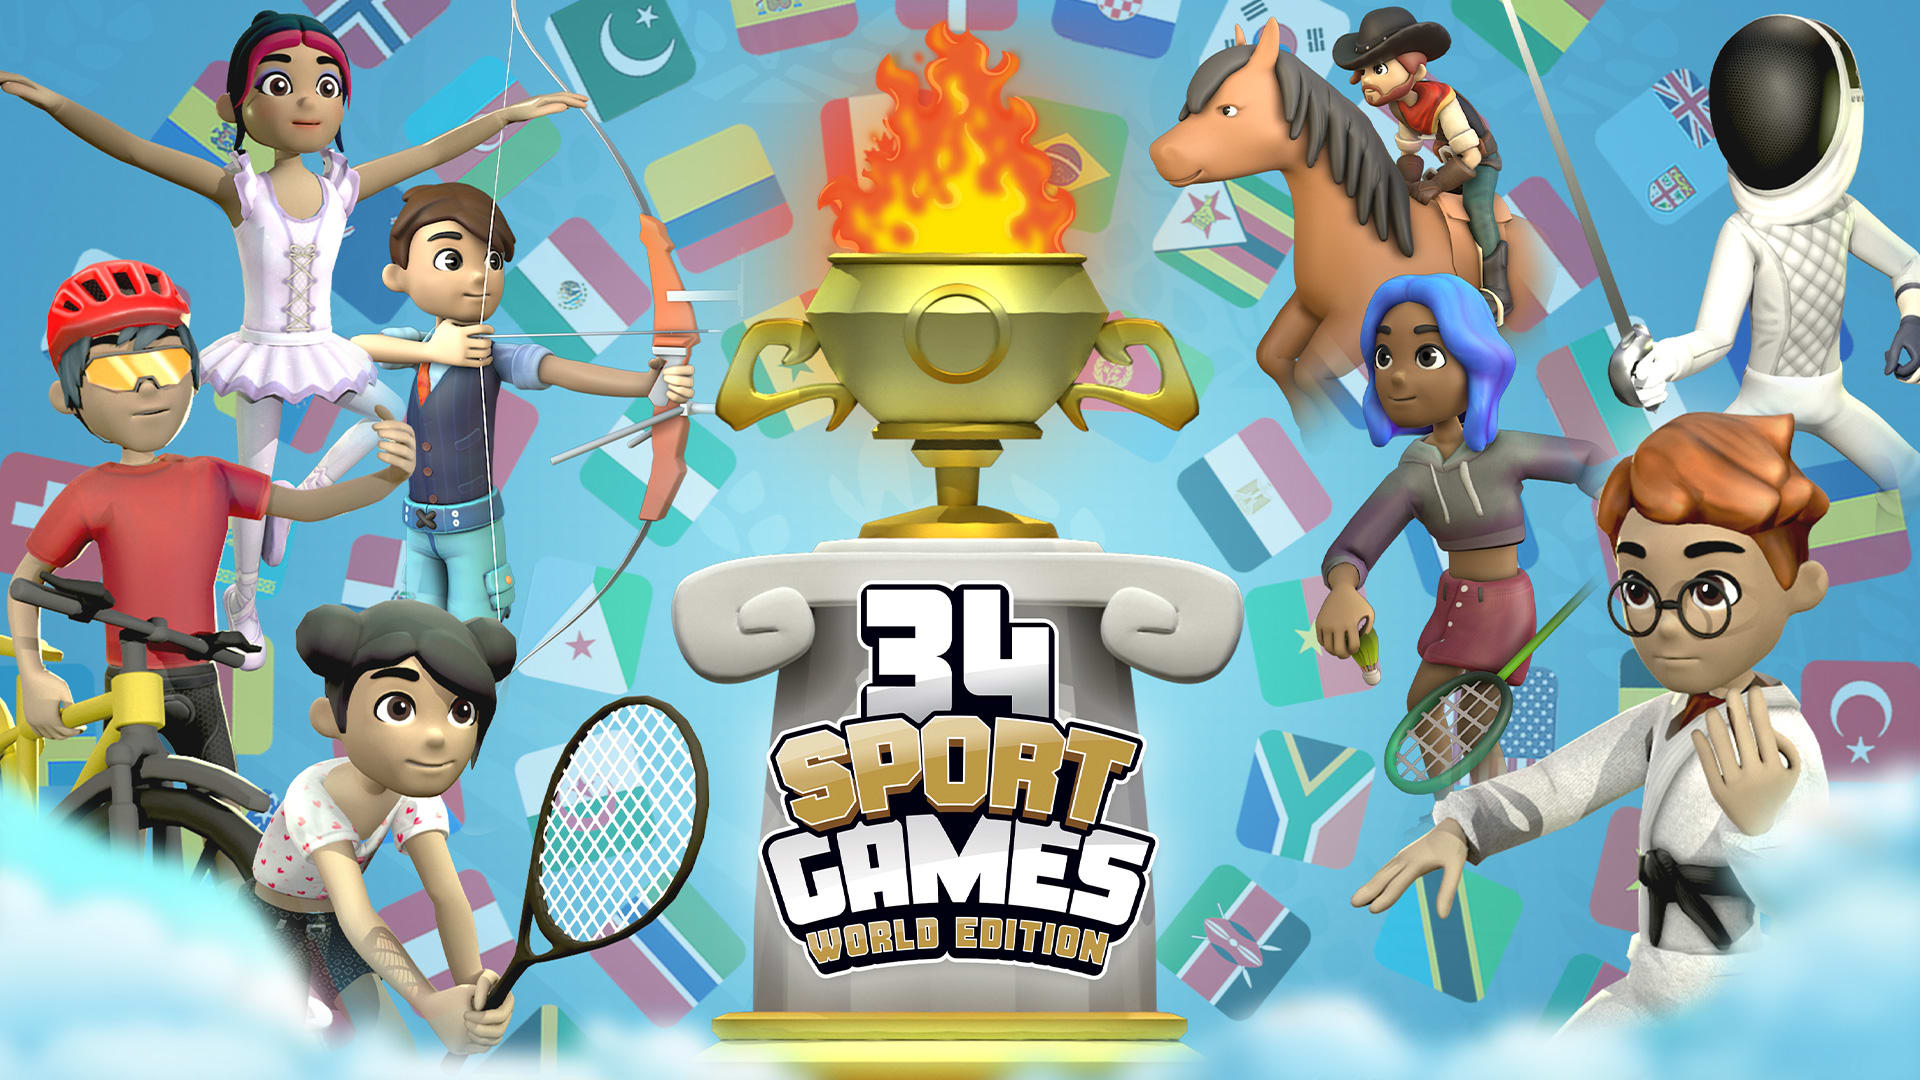 34 Sports Games - World Edition 1